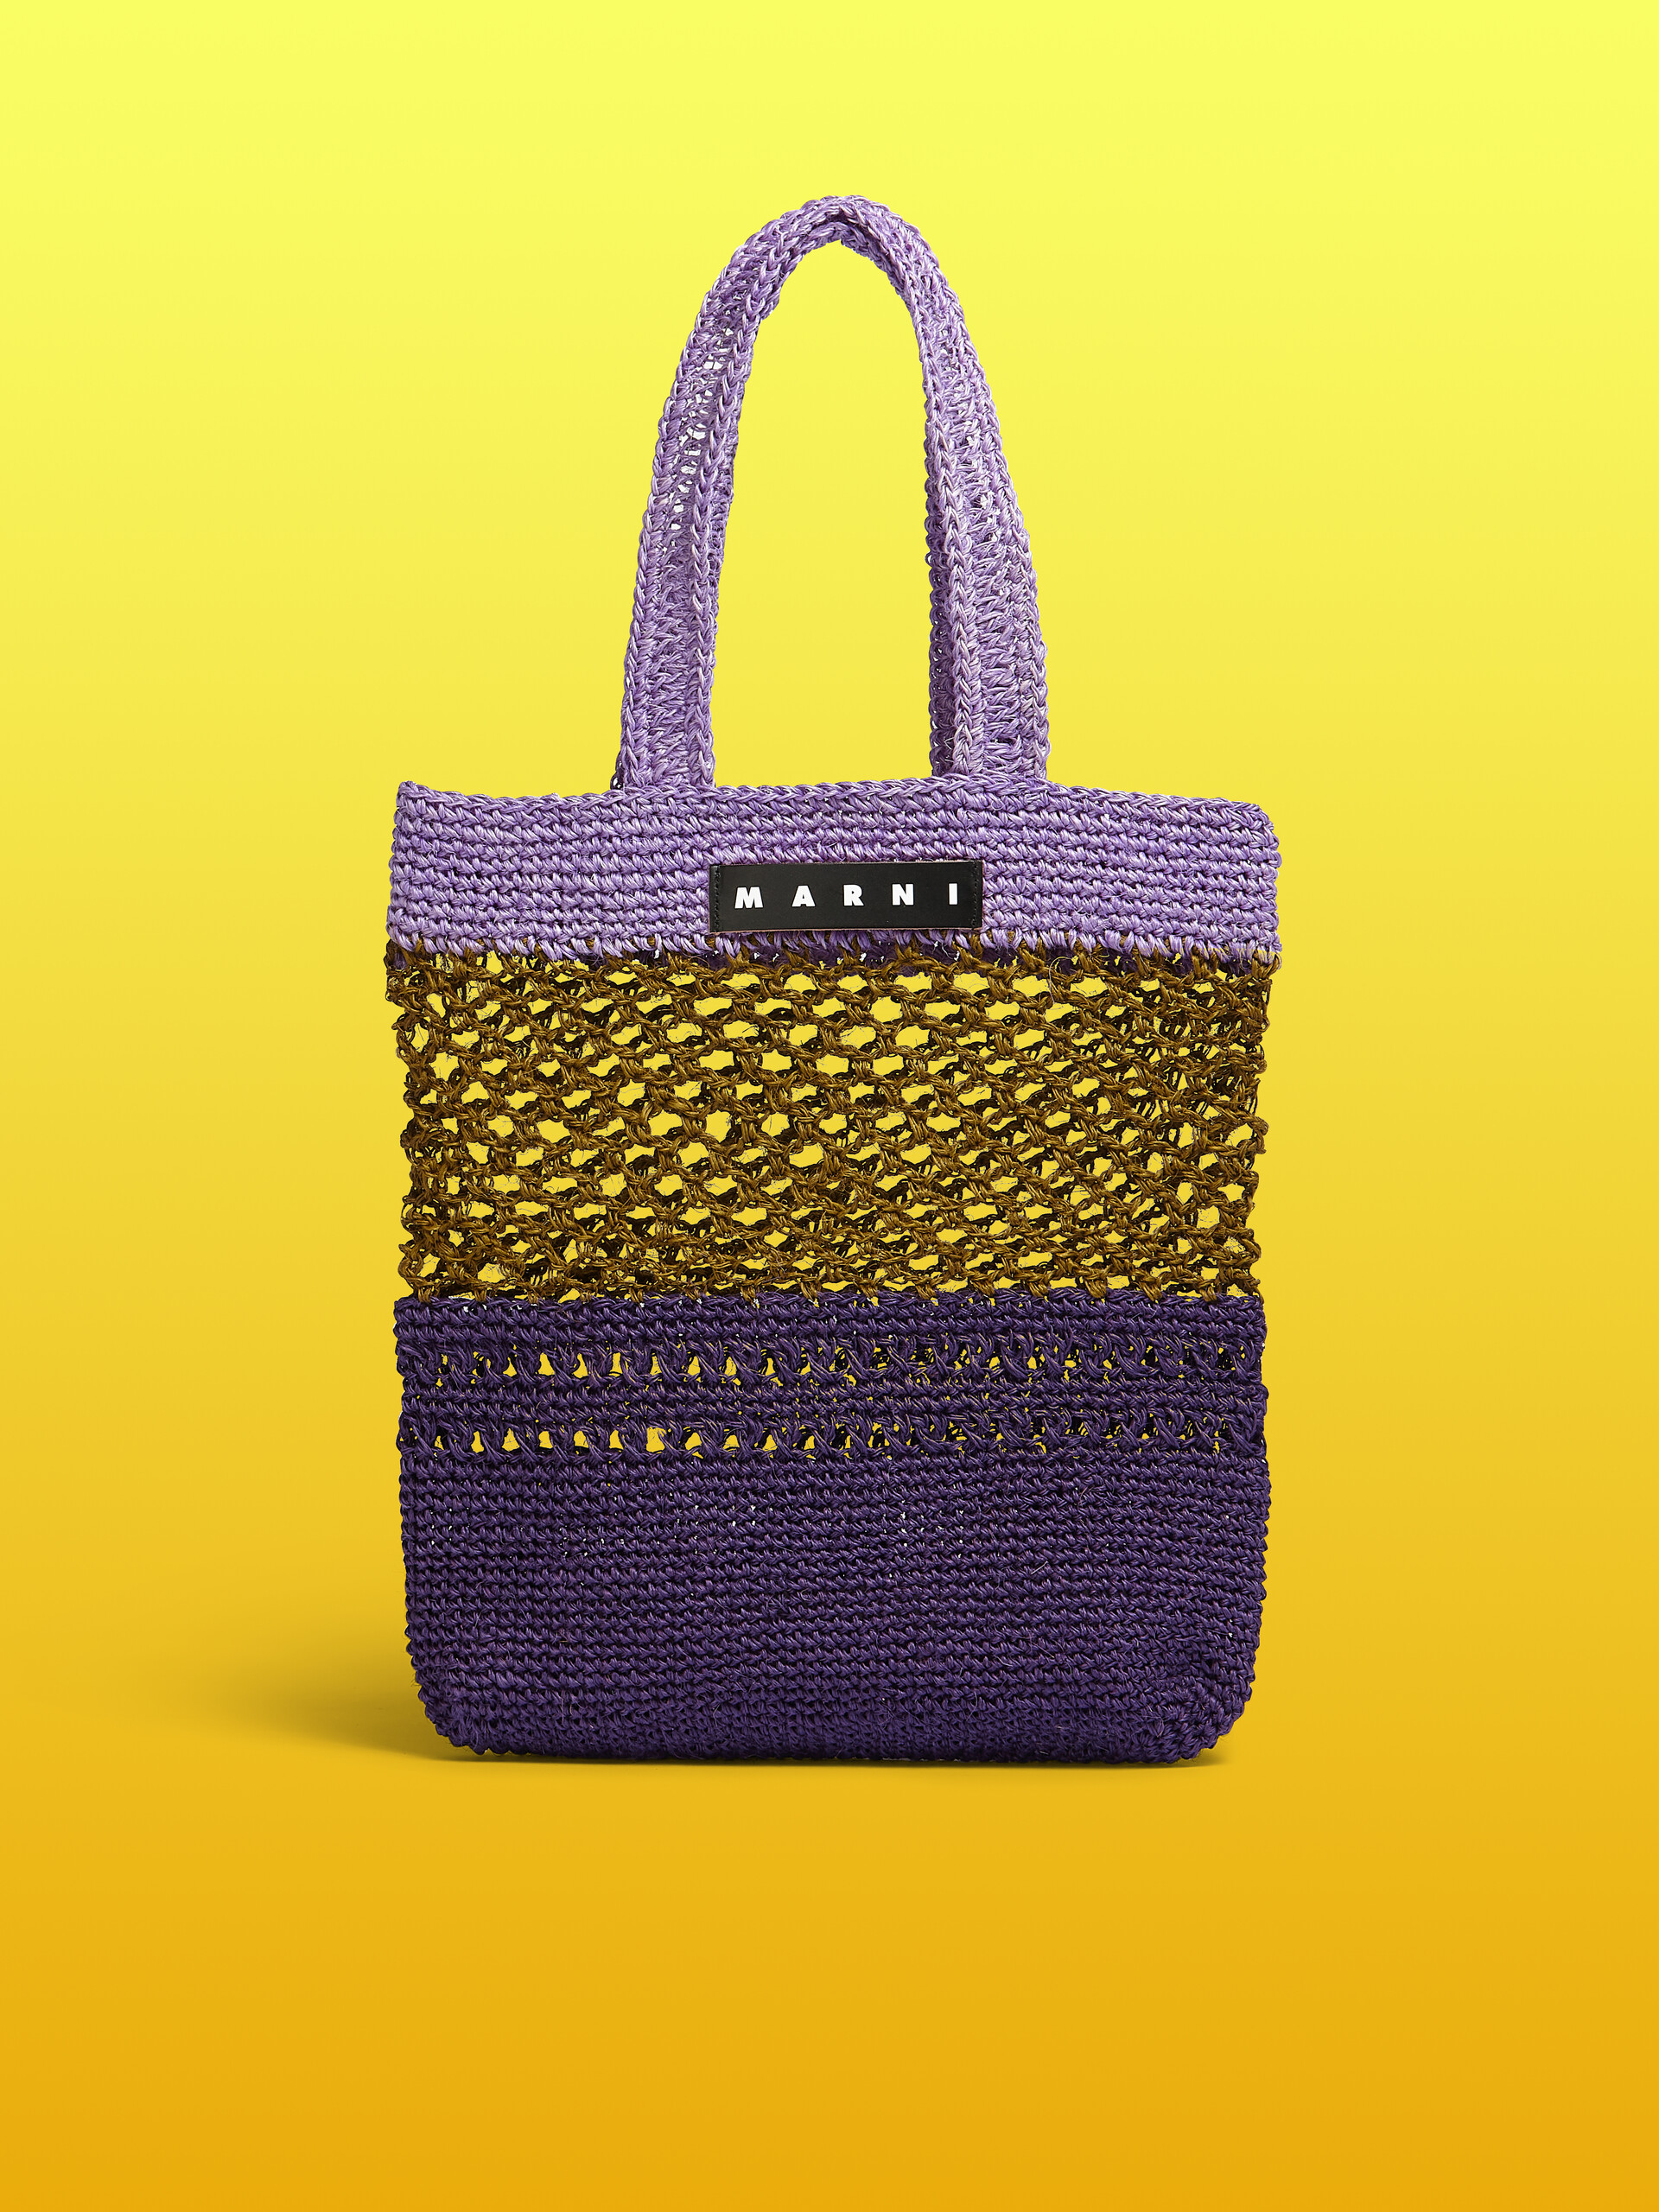 MARNI MARKET DRUM bag in purple and green natural fiber - Shopping Bags - Image 1